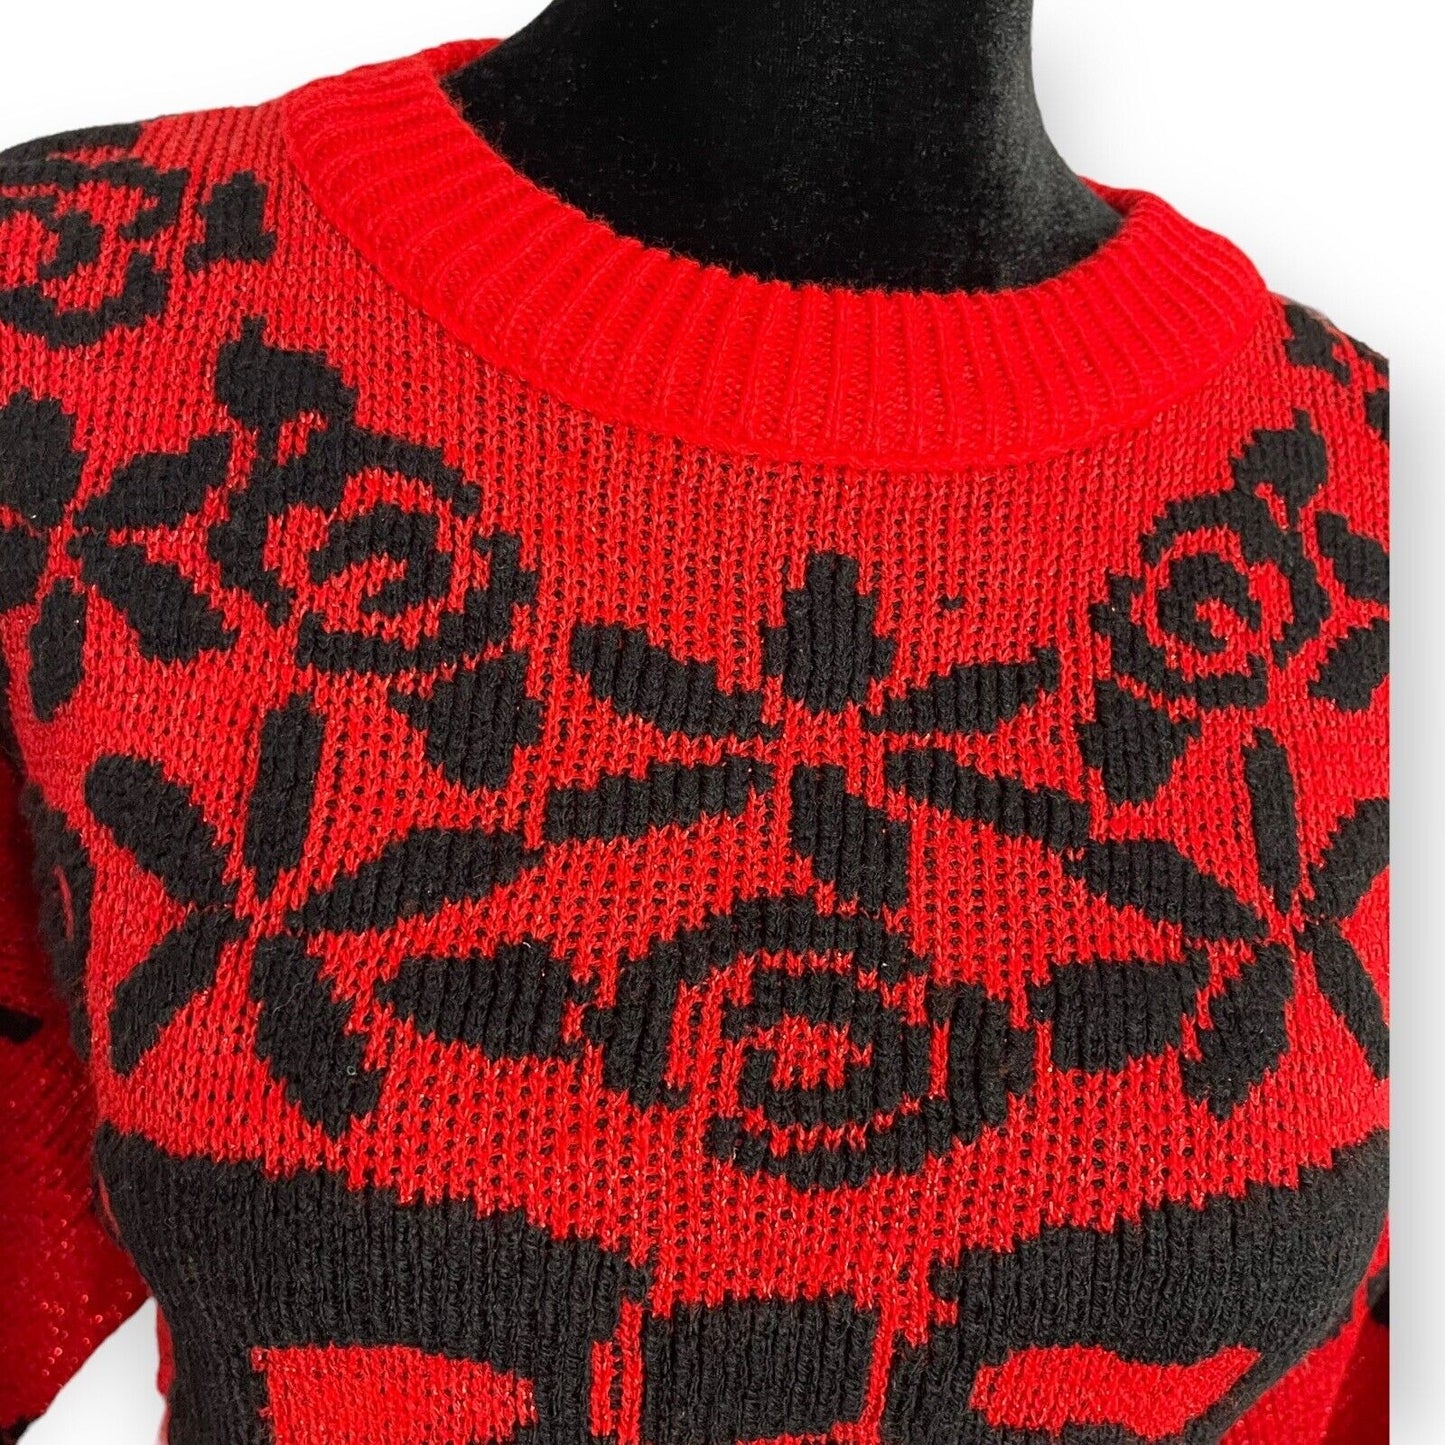 Retro By Renaissance Women's Crochet Knit Vintage Sweater Red Black Size XL Top